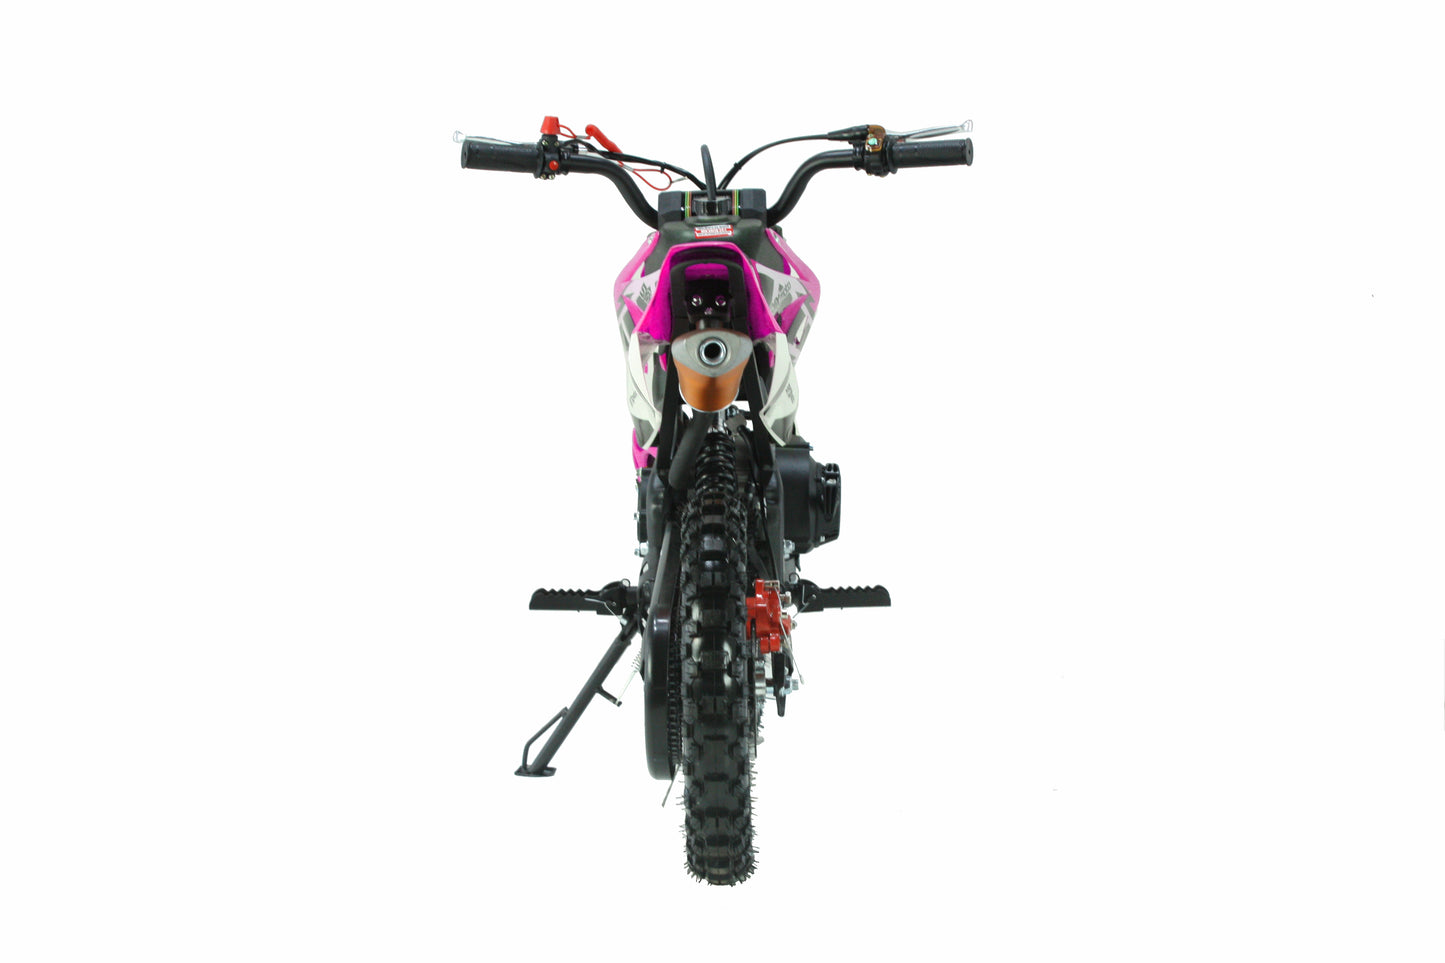 SYX MOTO Holeshot 50cc Pull Start Mini Dirt Bike, Pink - SYX MOTO